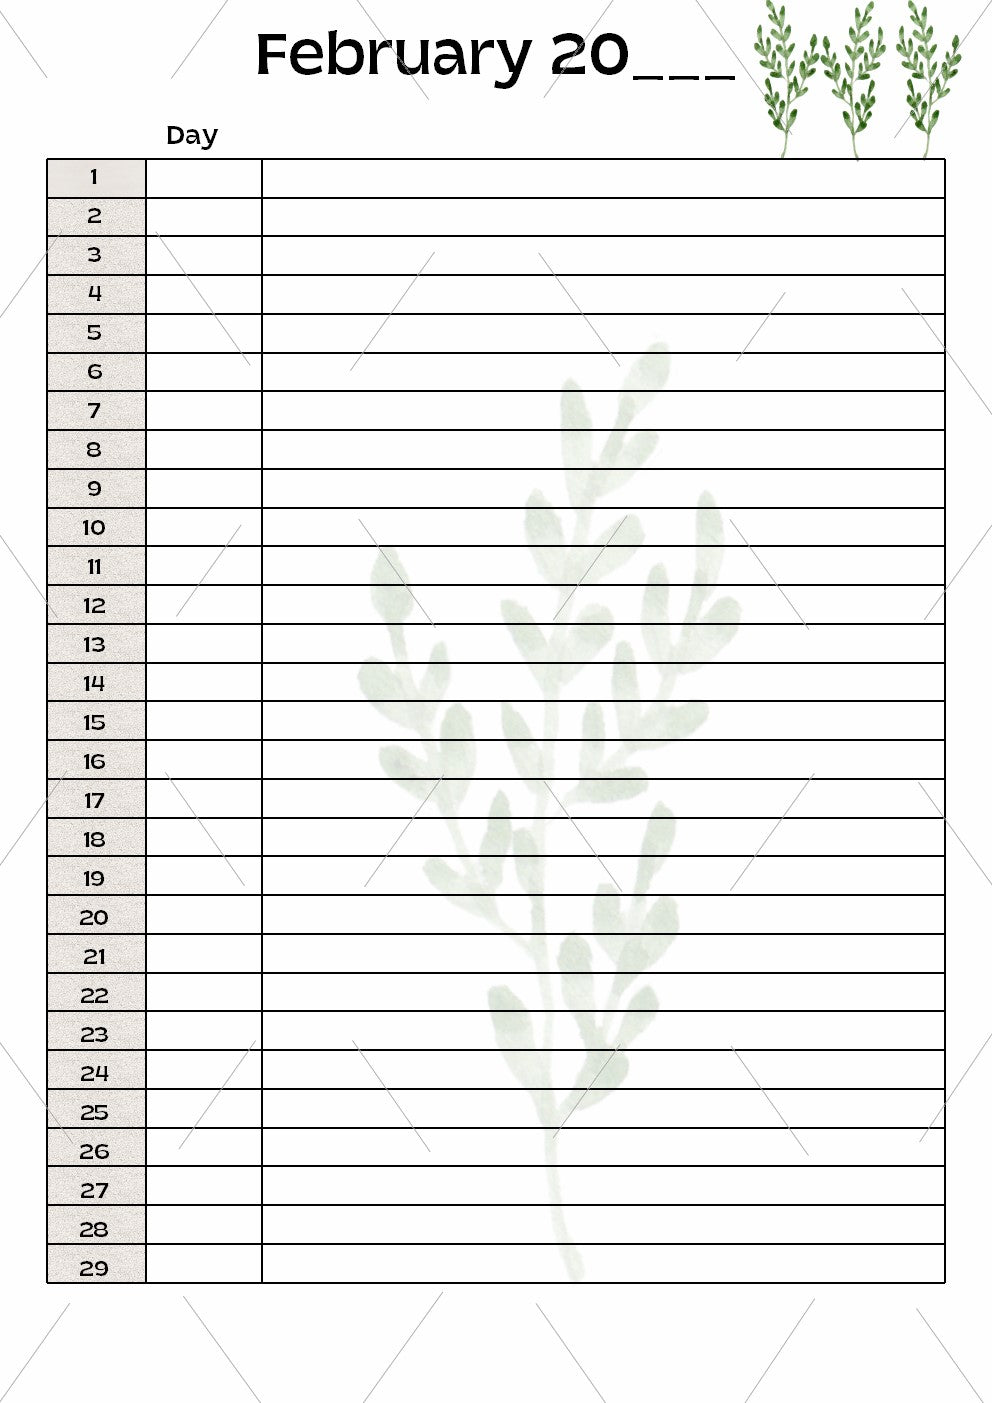 READY TO PRINT:  12 Month Calendar - Leafy